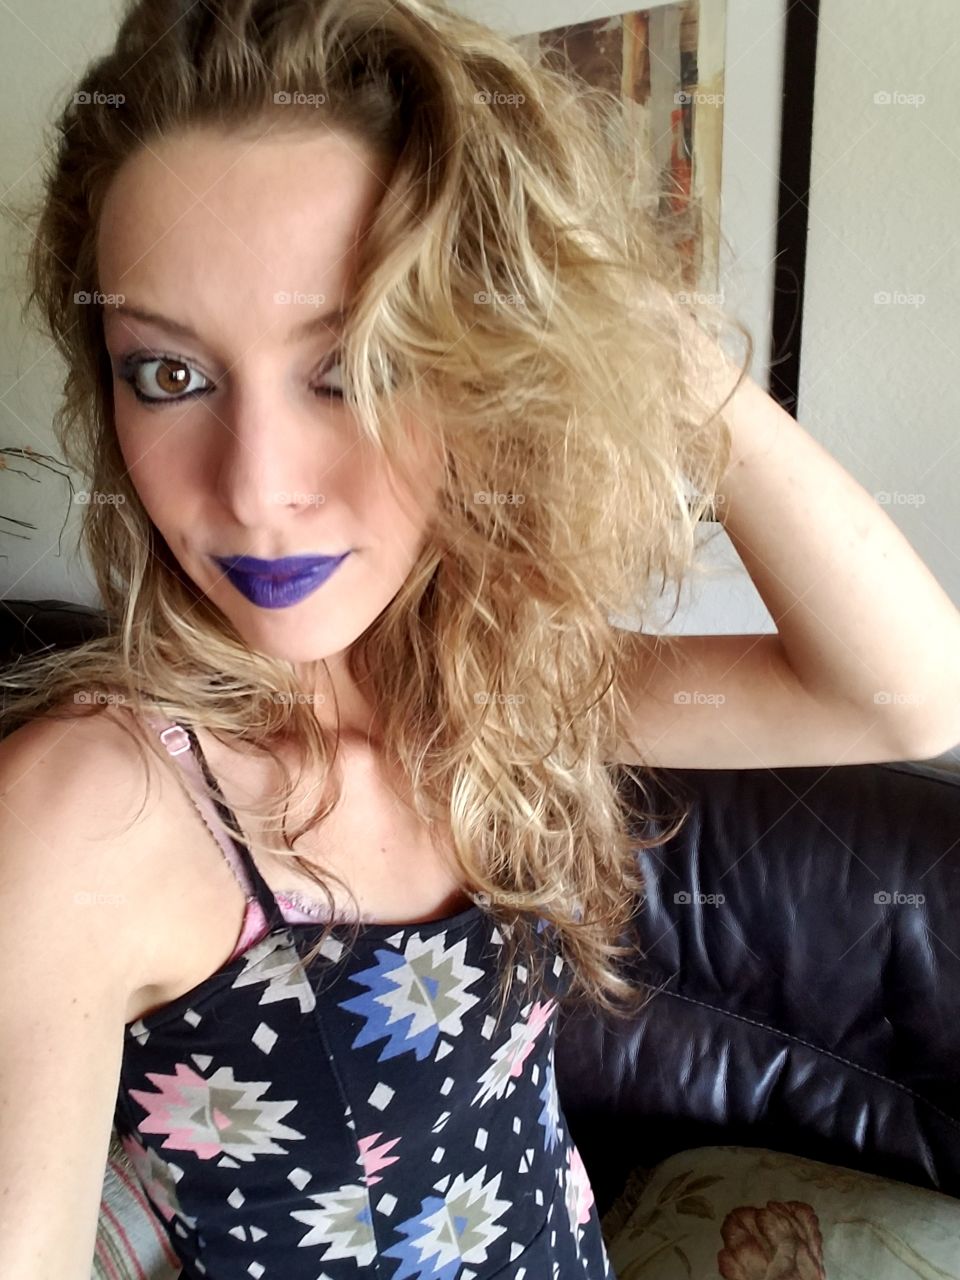 purple lip × ROMPER × MESSY SHOWER HAIR